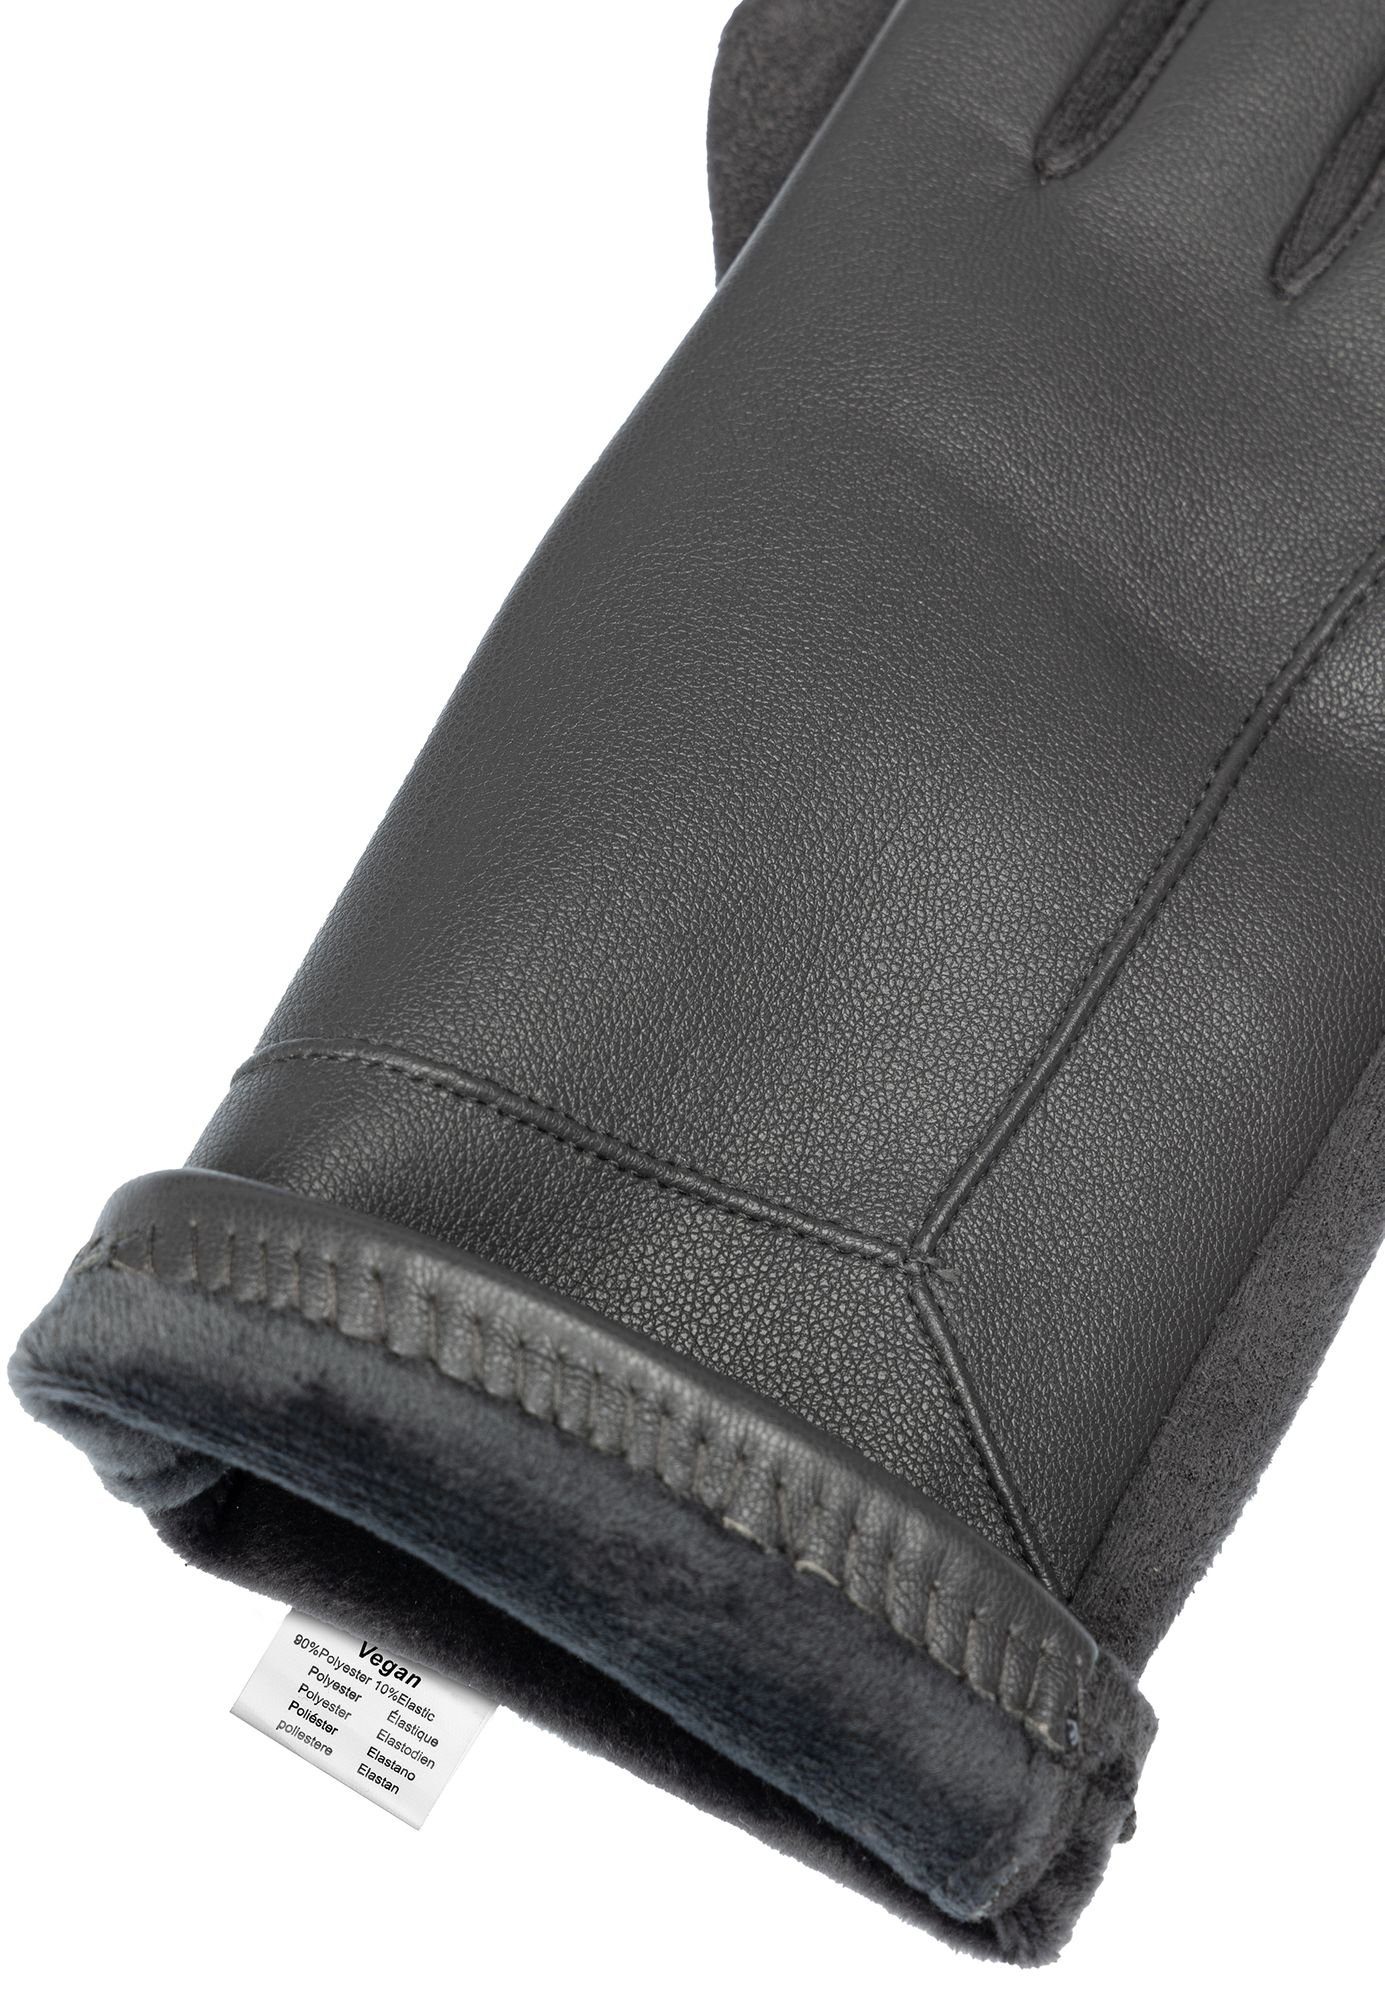 Caspar Strickhandschuhe GLV015 elegante dunkelgrau uni Handschuhe Damen klassisch